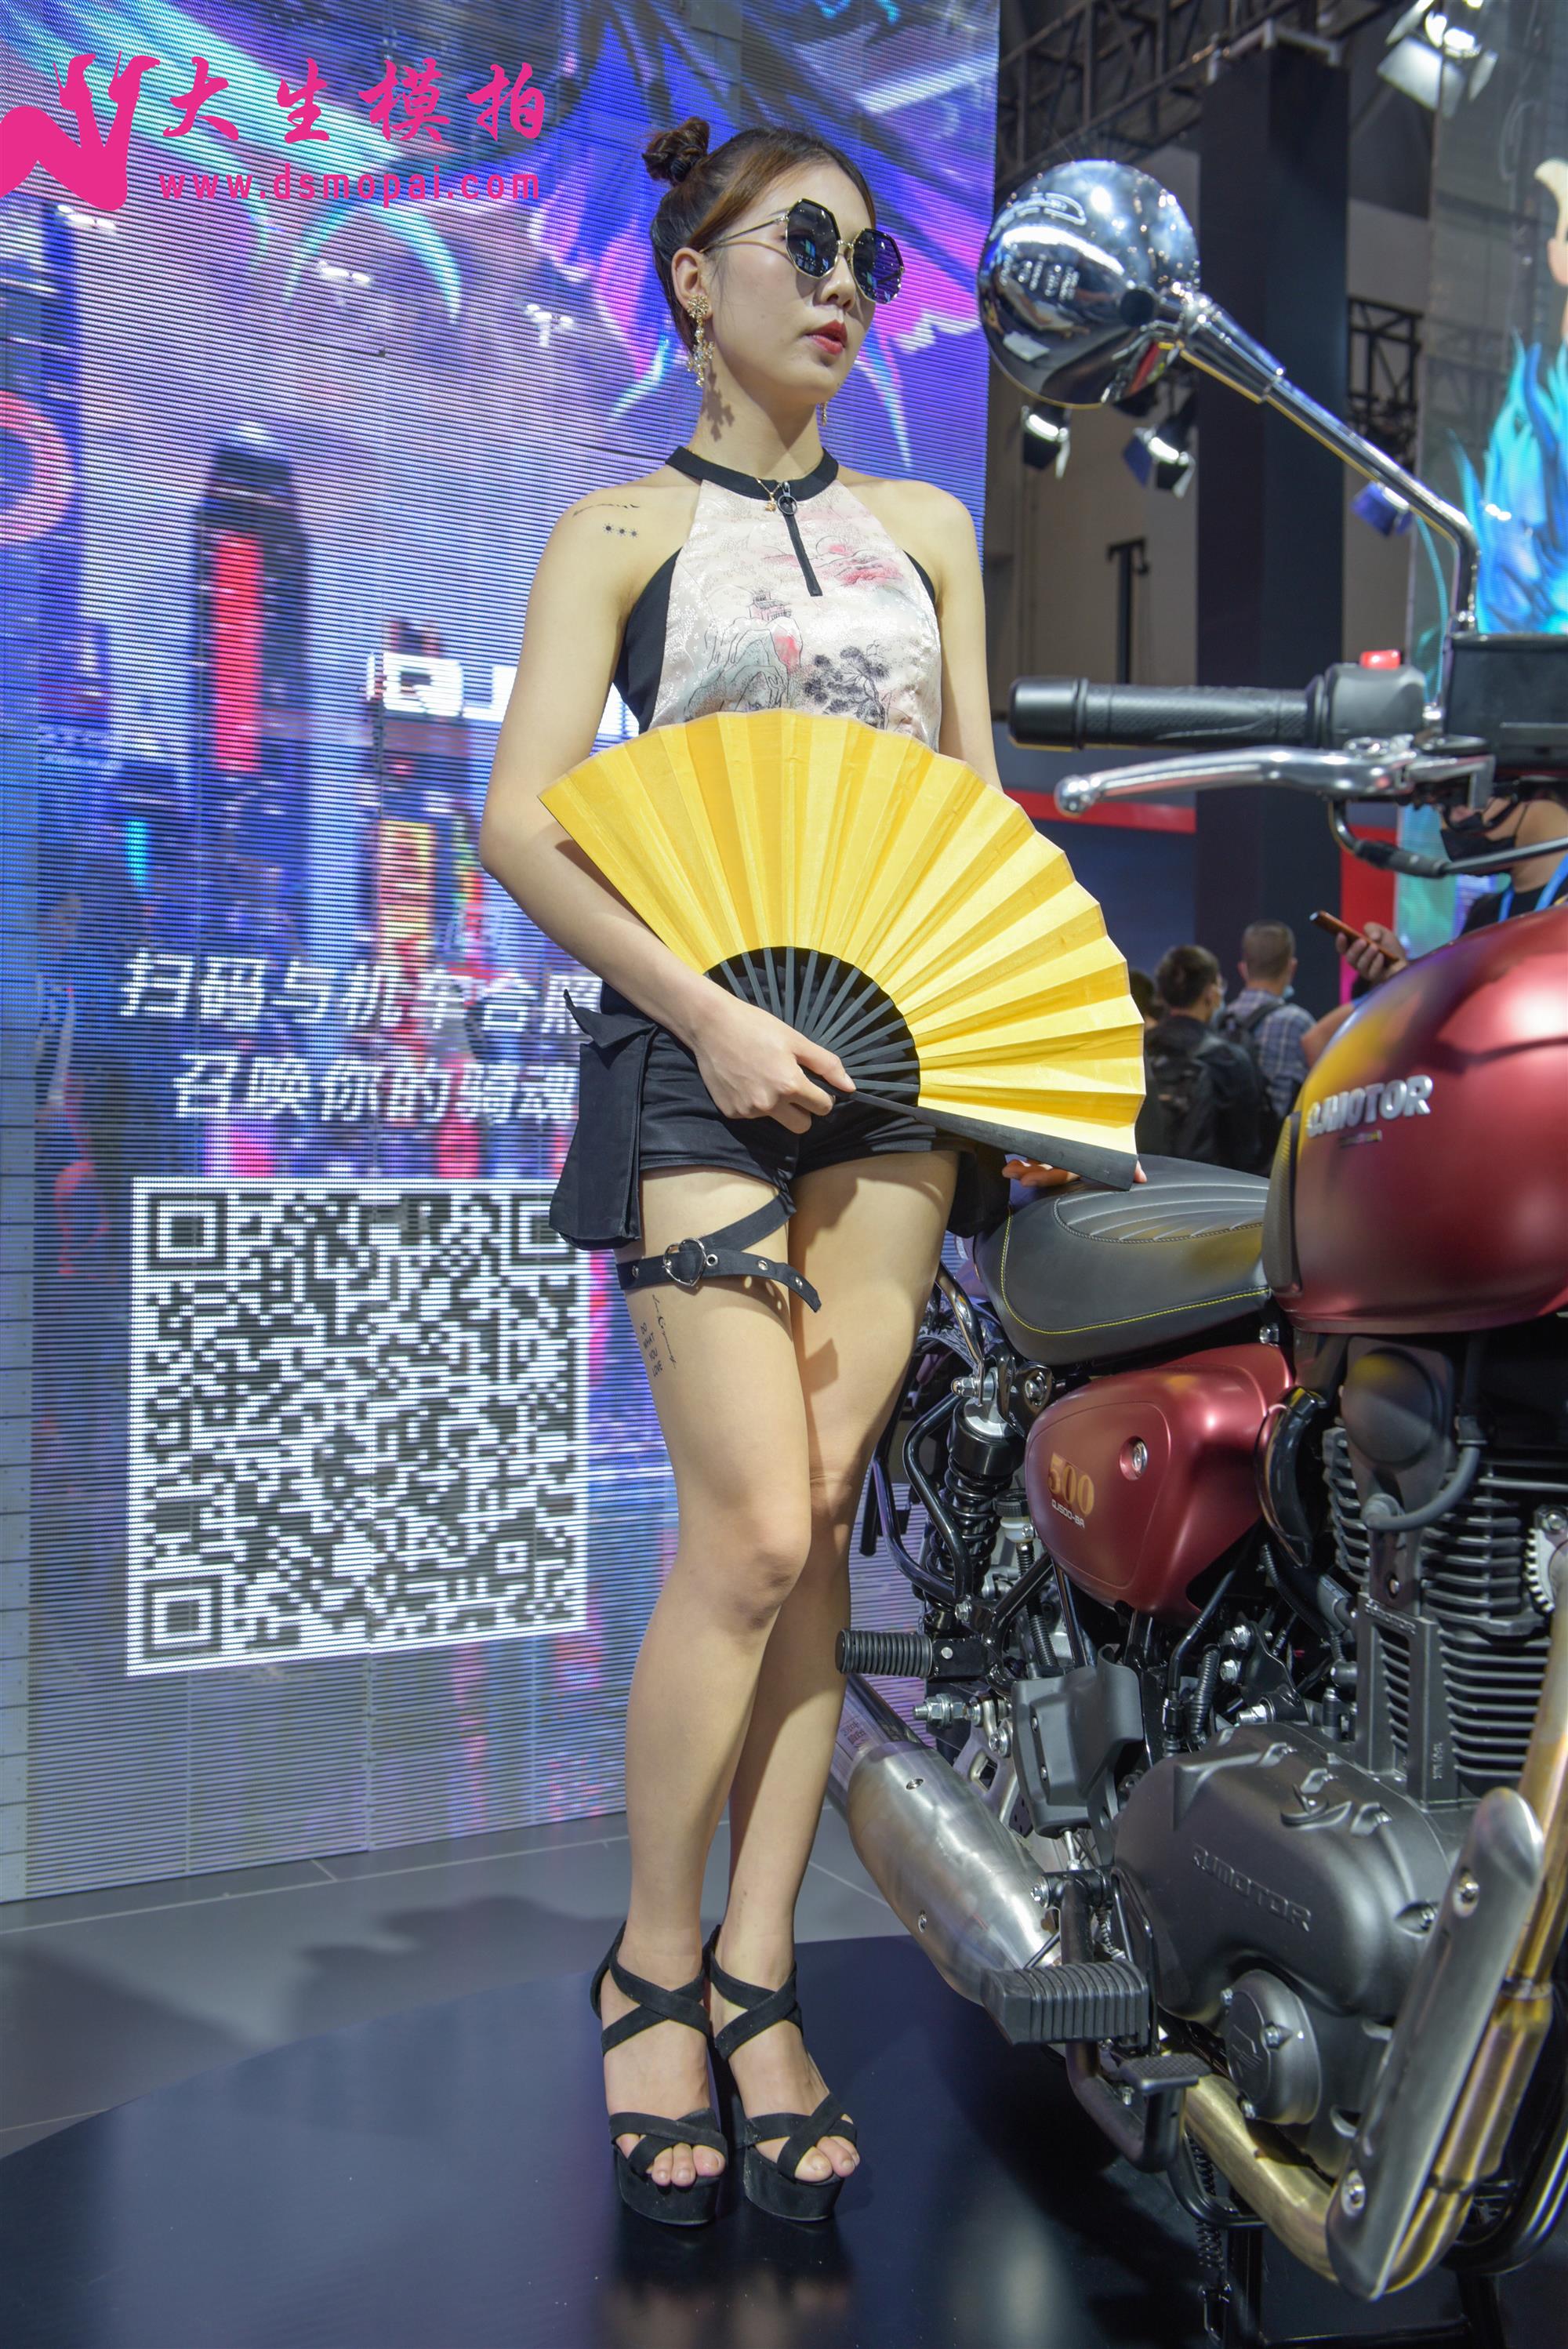 DSMP 大生模拍 No.249 第十八届中国国际摩托车展览会模特 - 35.jpg